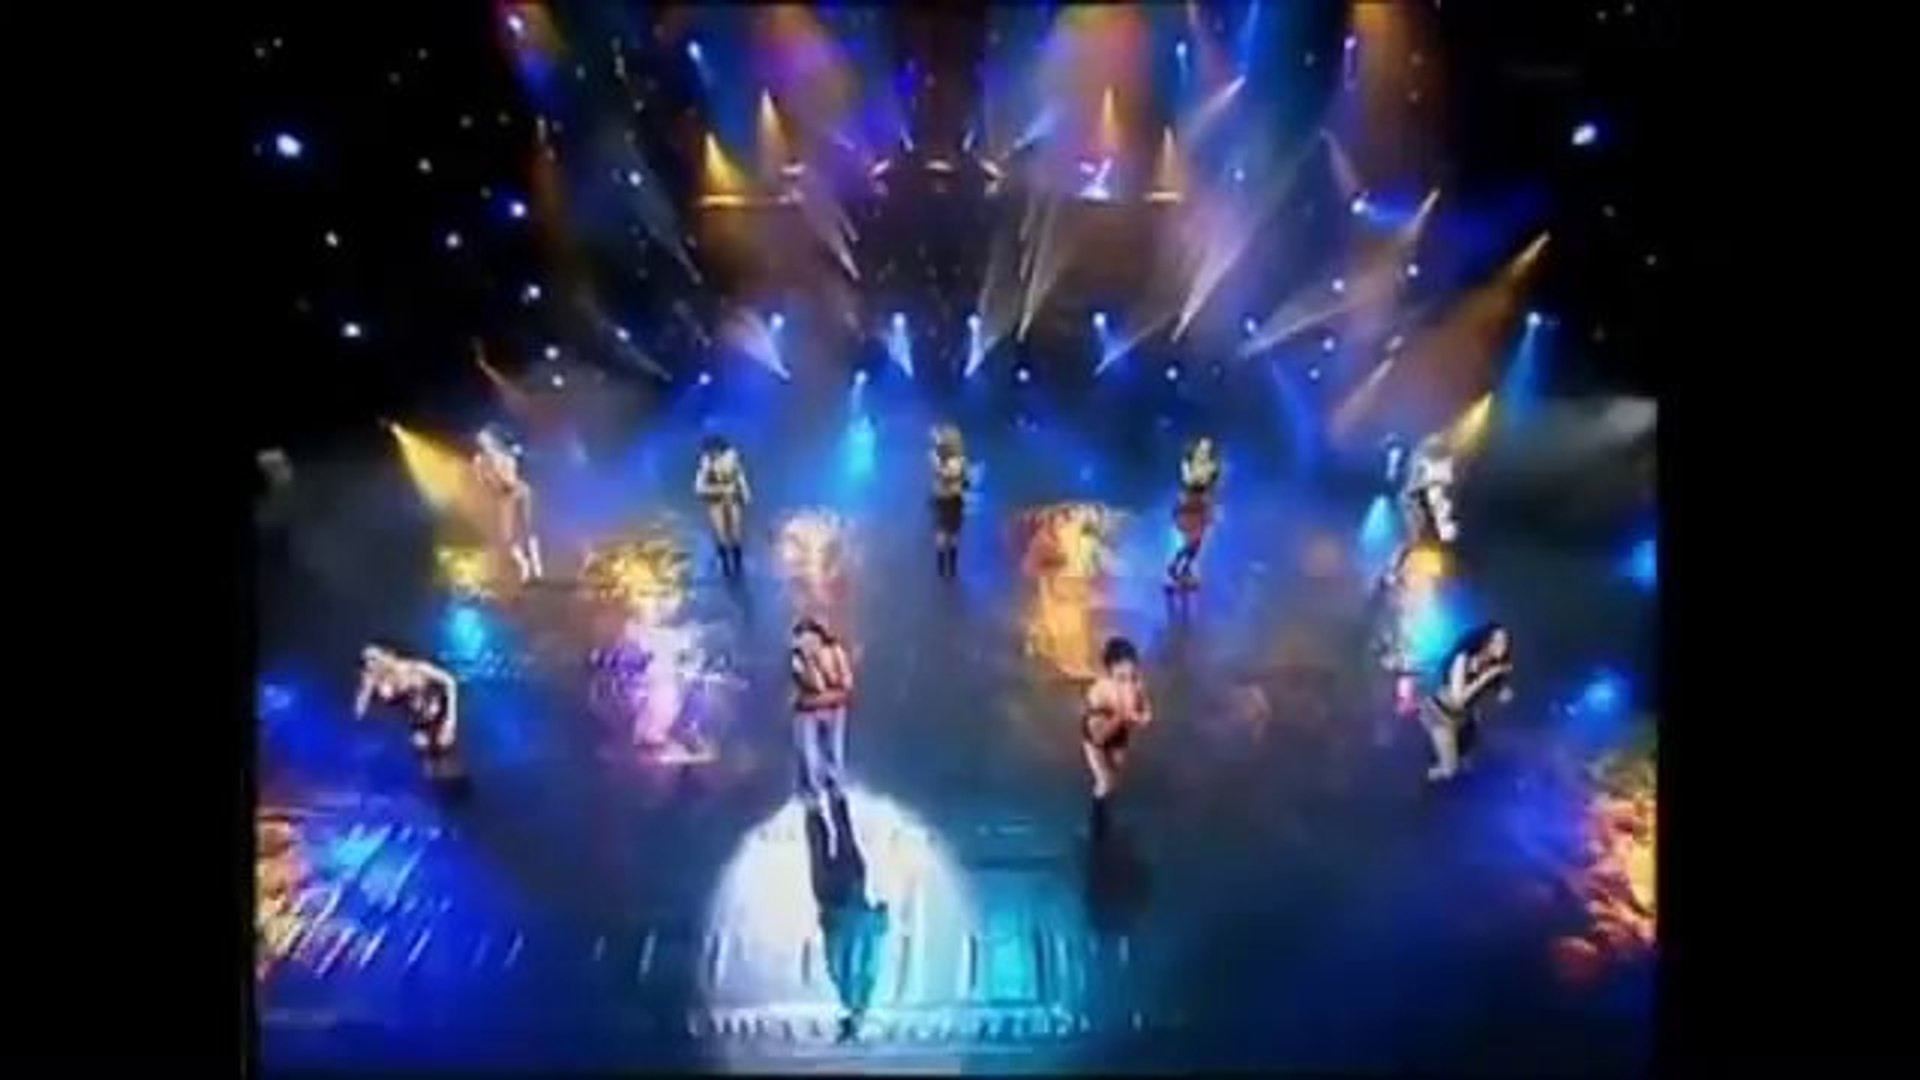 Girls dancing to the music - Dolce Gabbana VERKA SERDUCHKA - video  Dailymotion